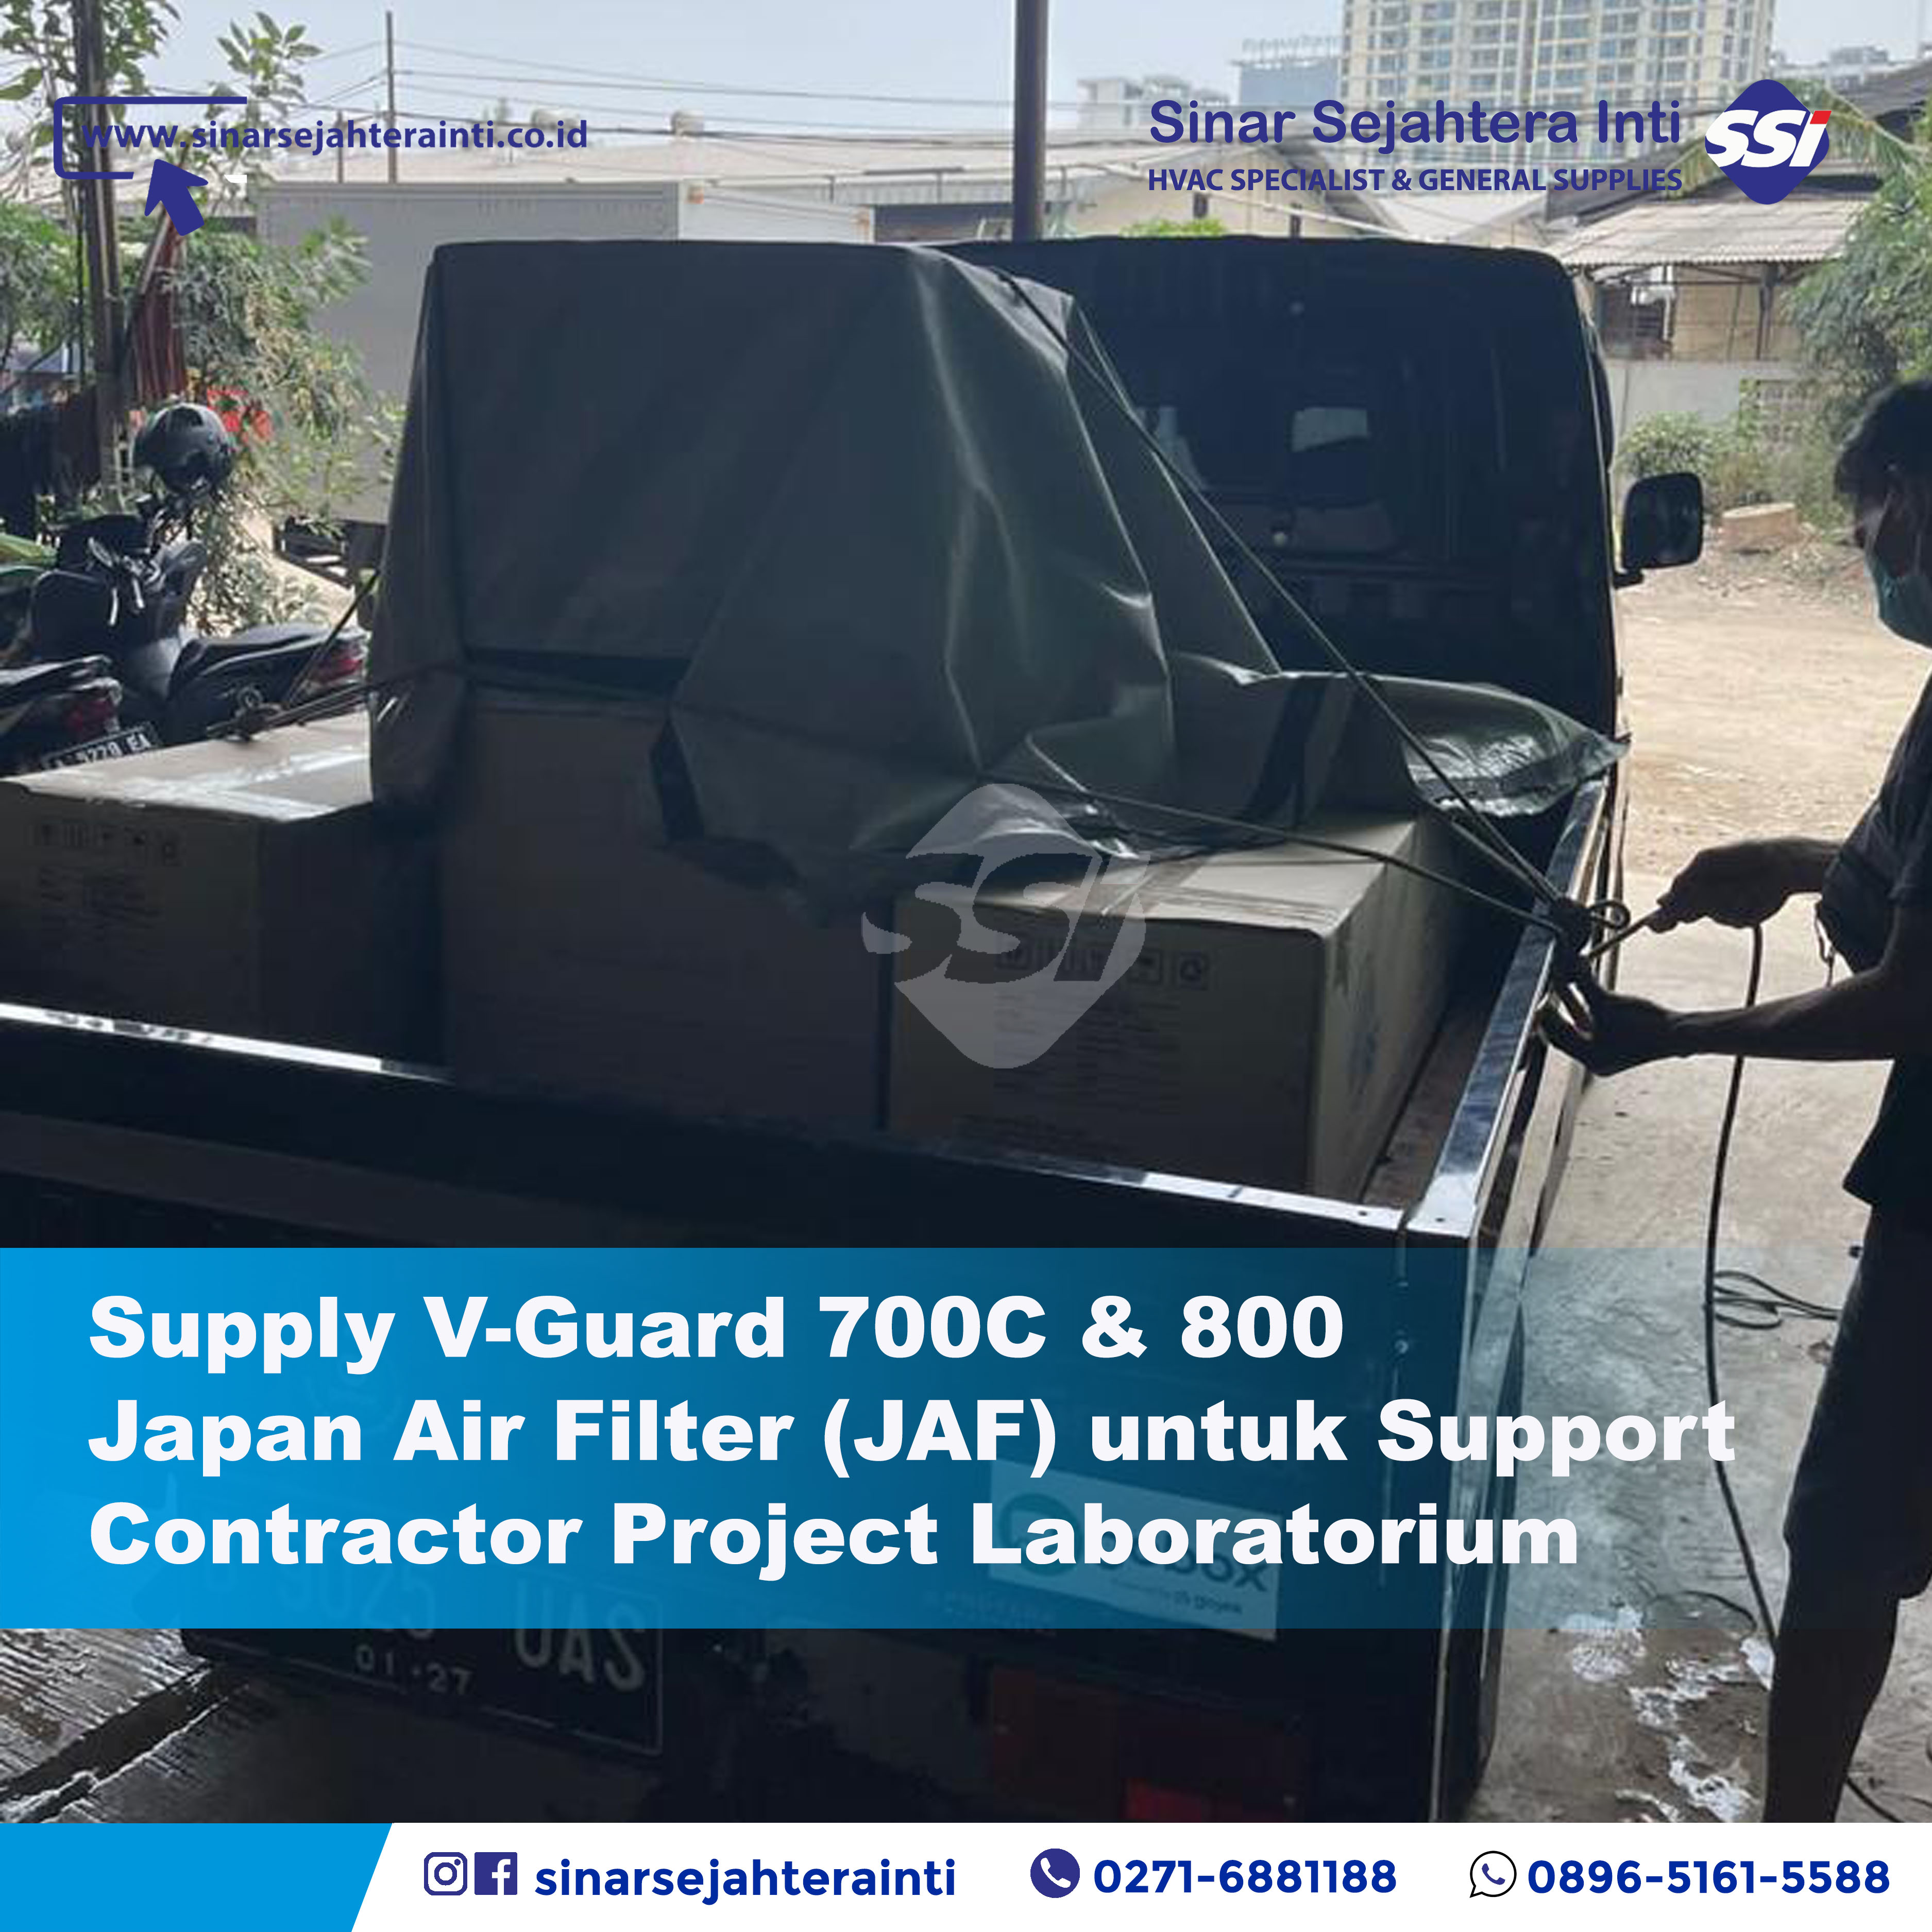 Supply Smart Air Purifier V-Guard 700C & V-Guard 800 Japan Air Filter (JAF) untuk Support Contractor Project Laboratorium